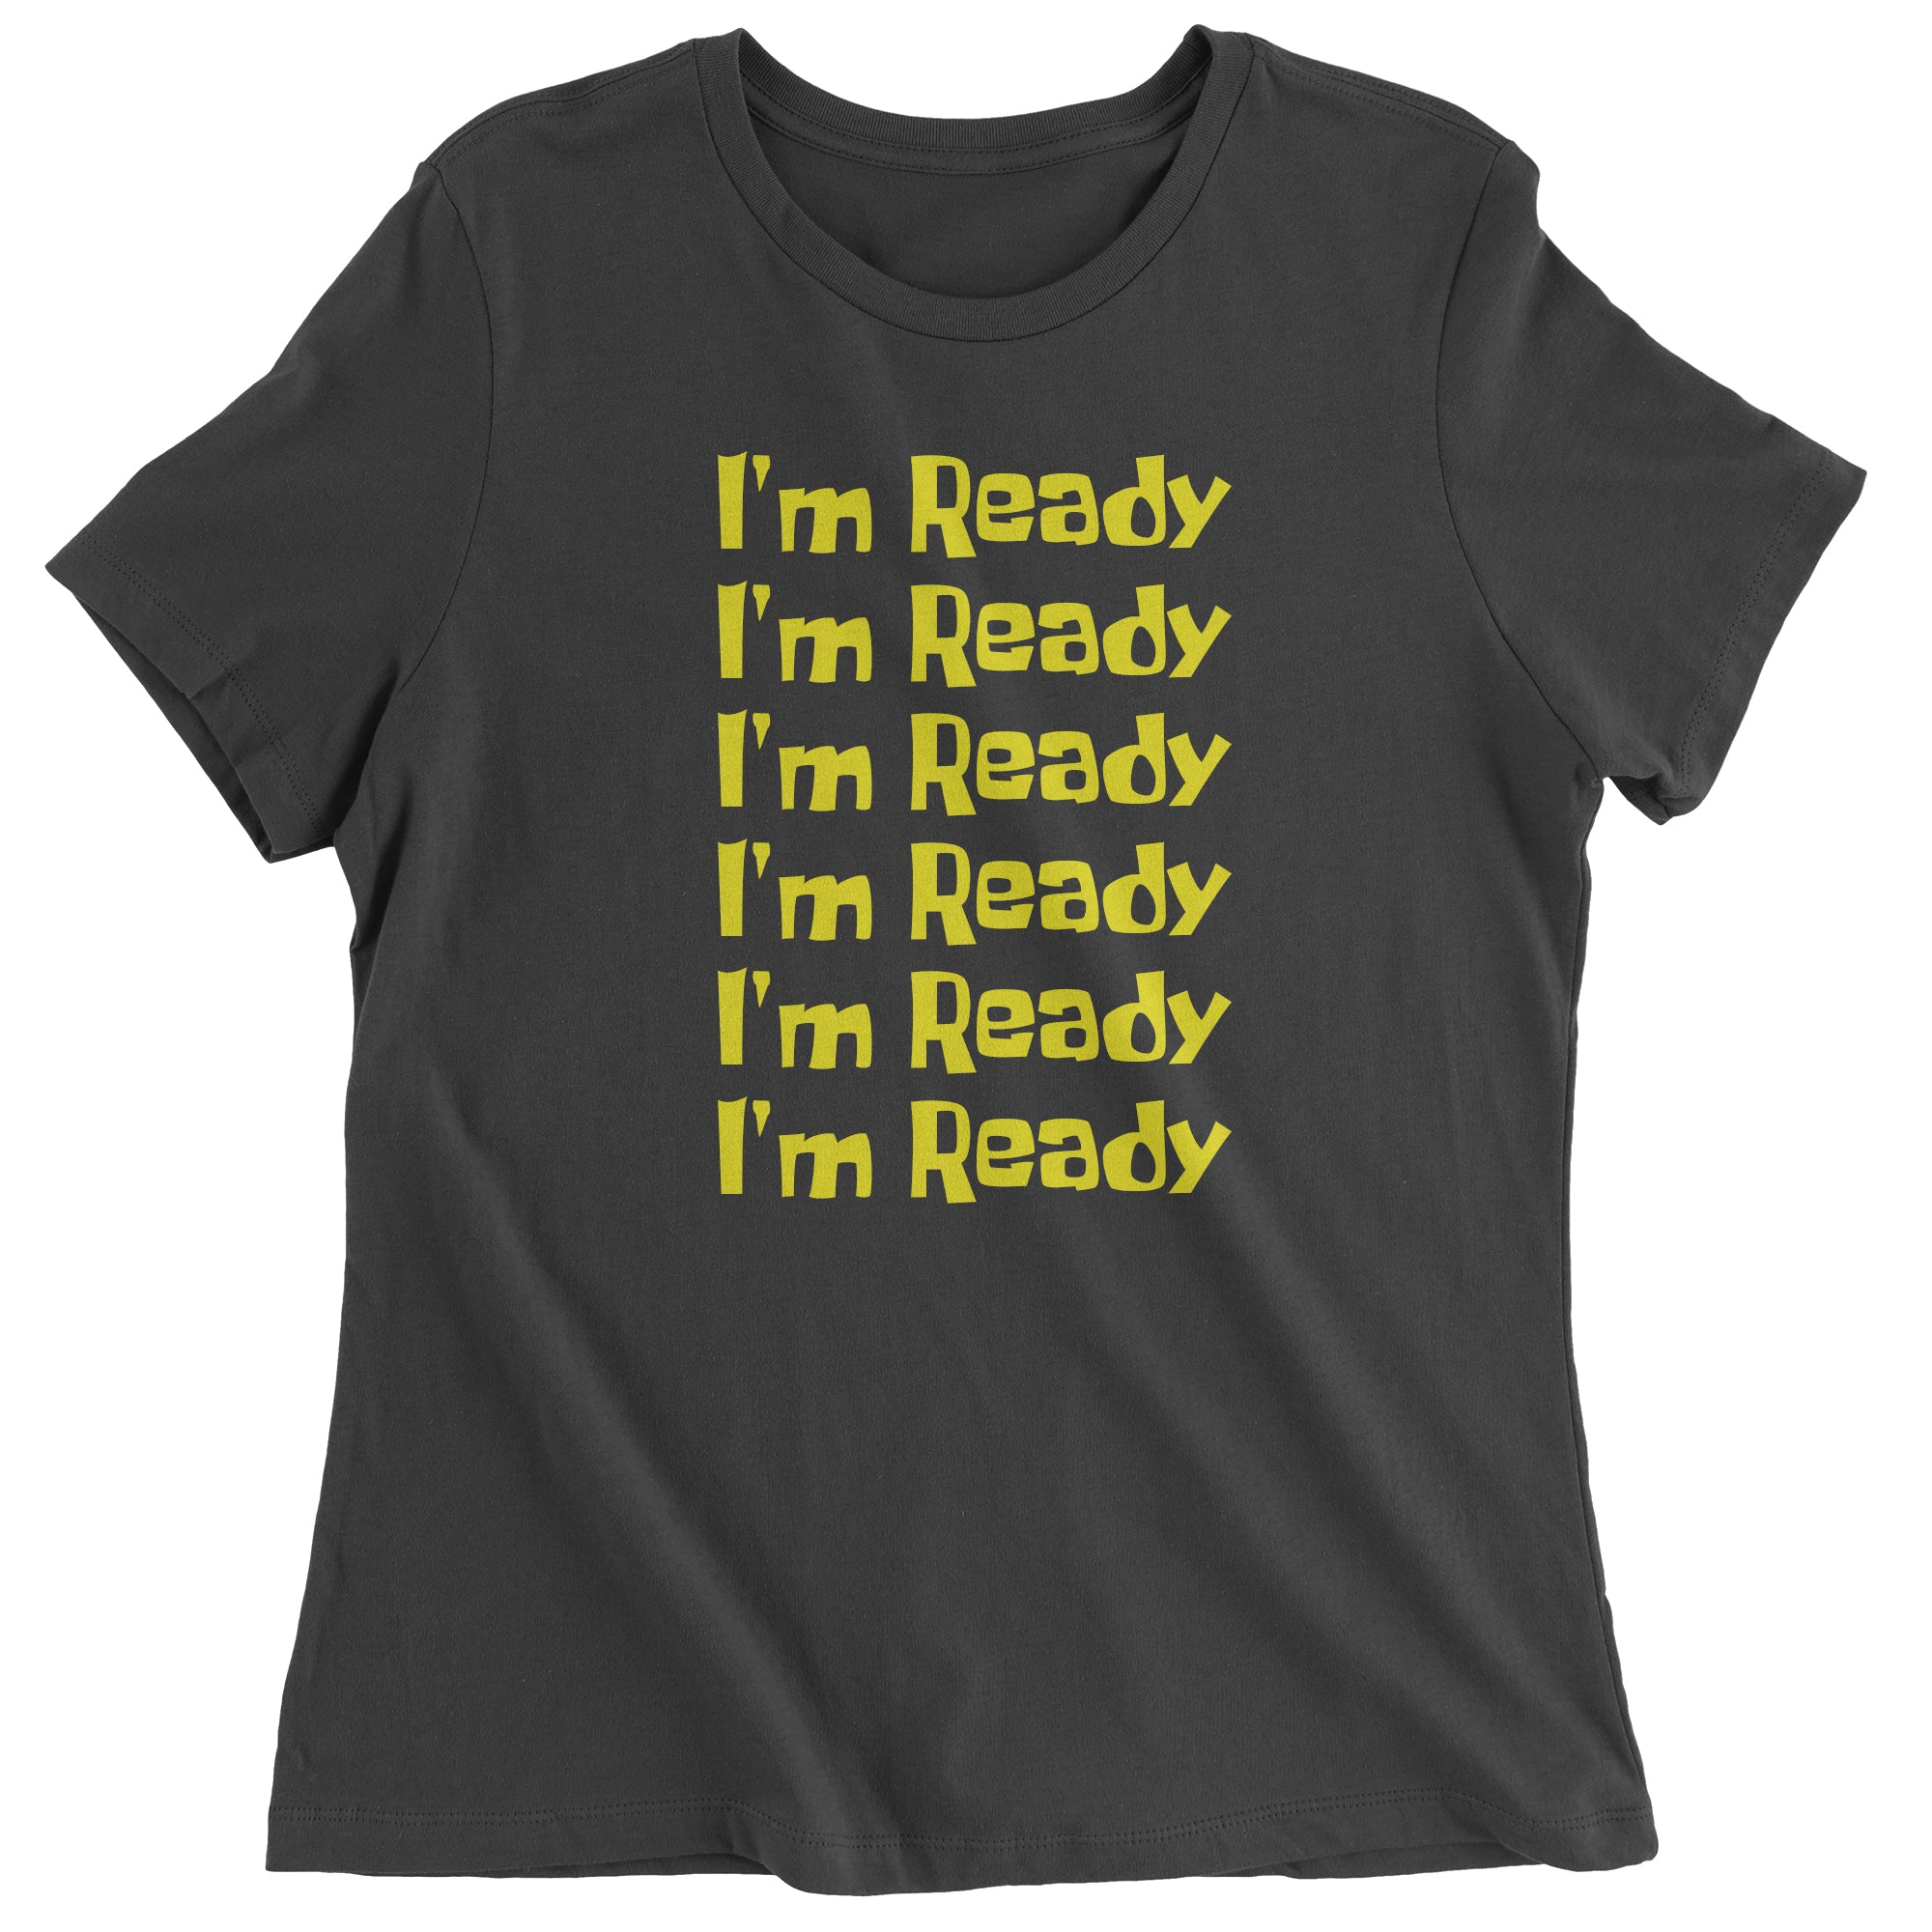 I'm Ready Funny Quote Catchphrase Spongebobble Women's T-Shirt